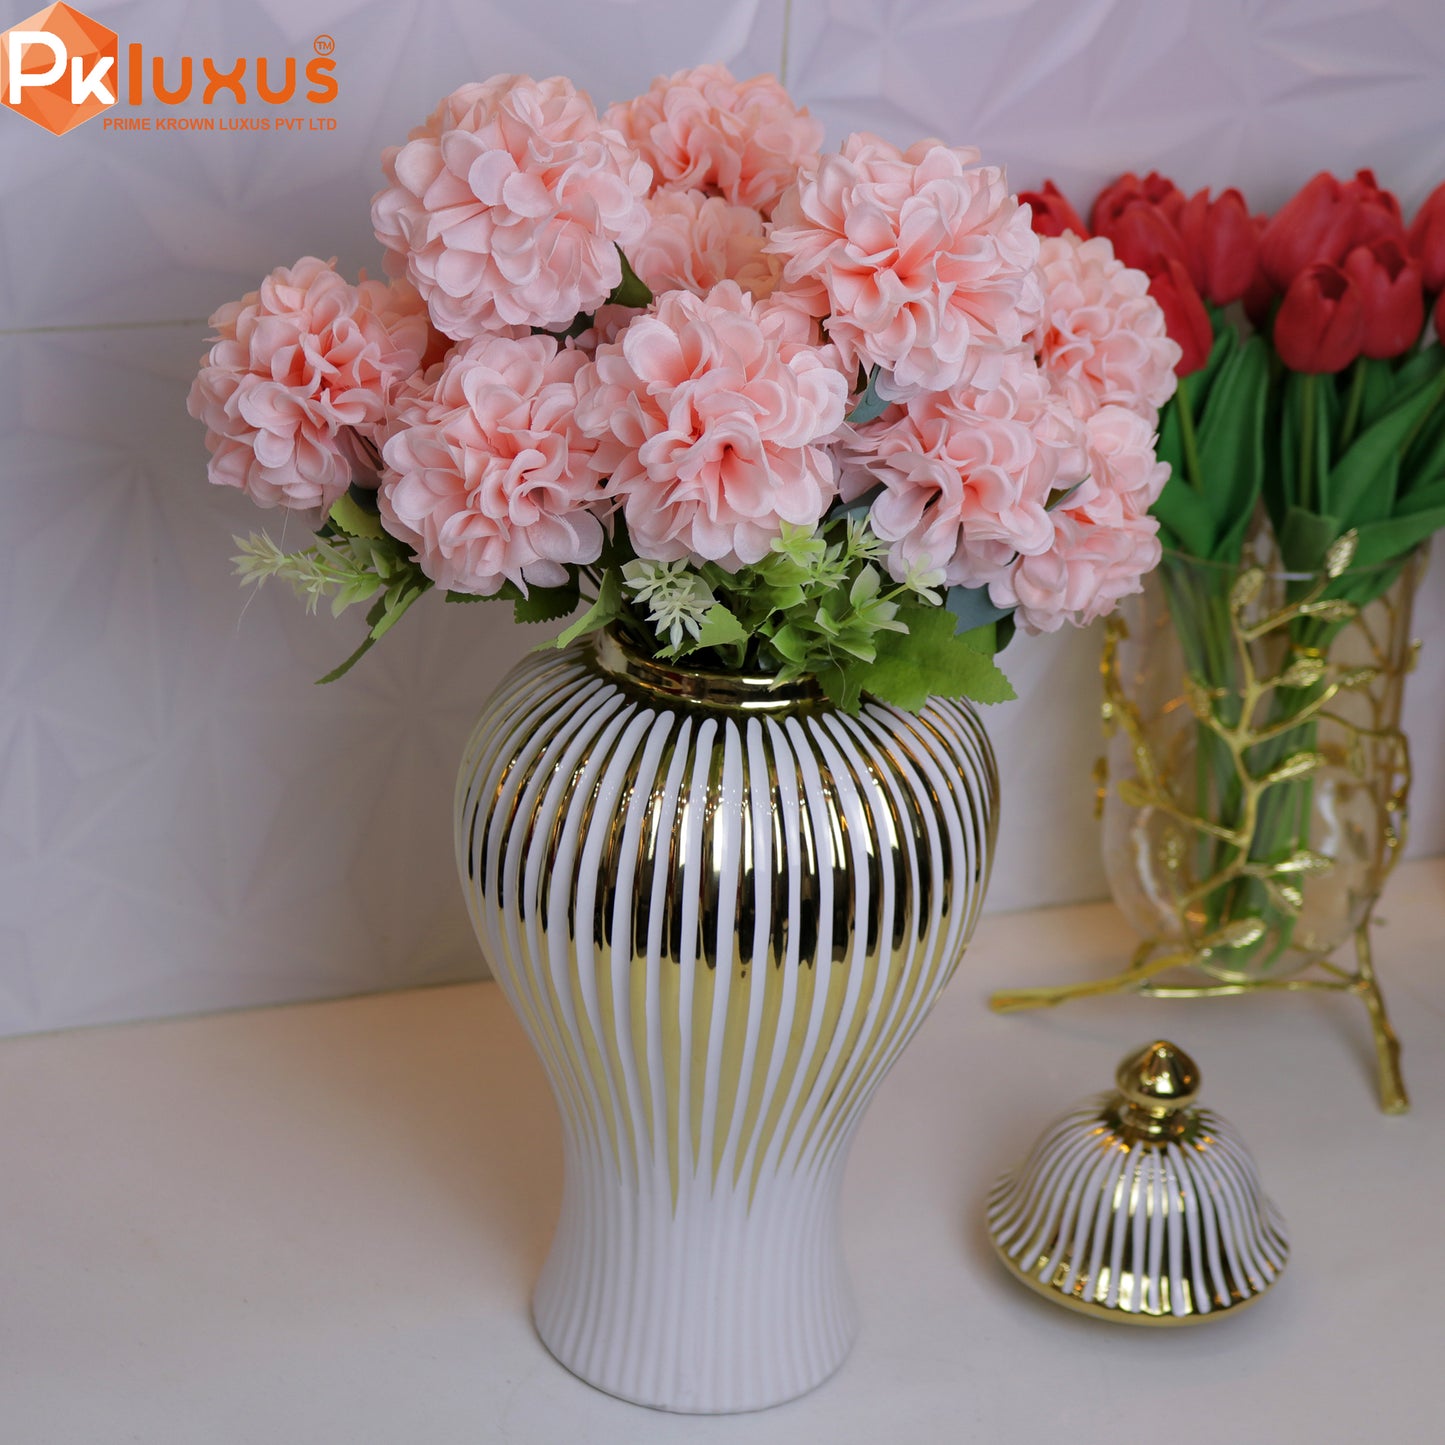 24-inch Pink Hydrangeas Ball Flowers By PK LUXUS™ - PK LUXUS